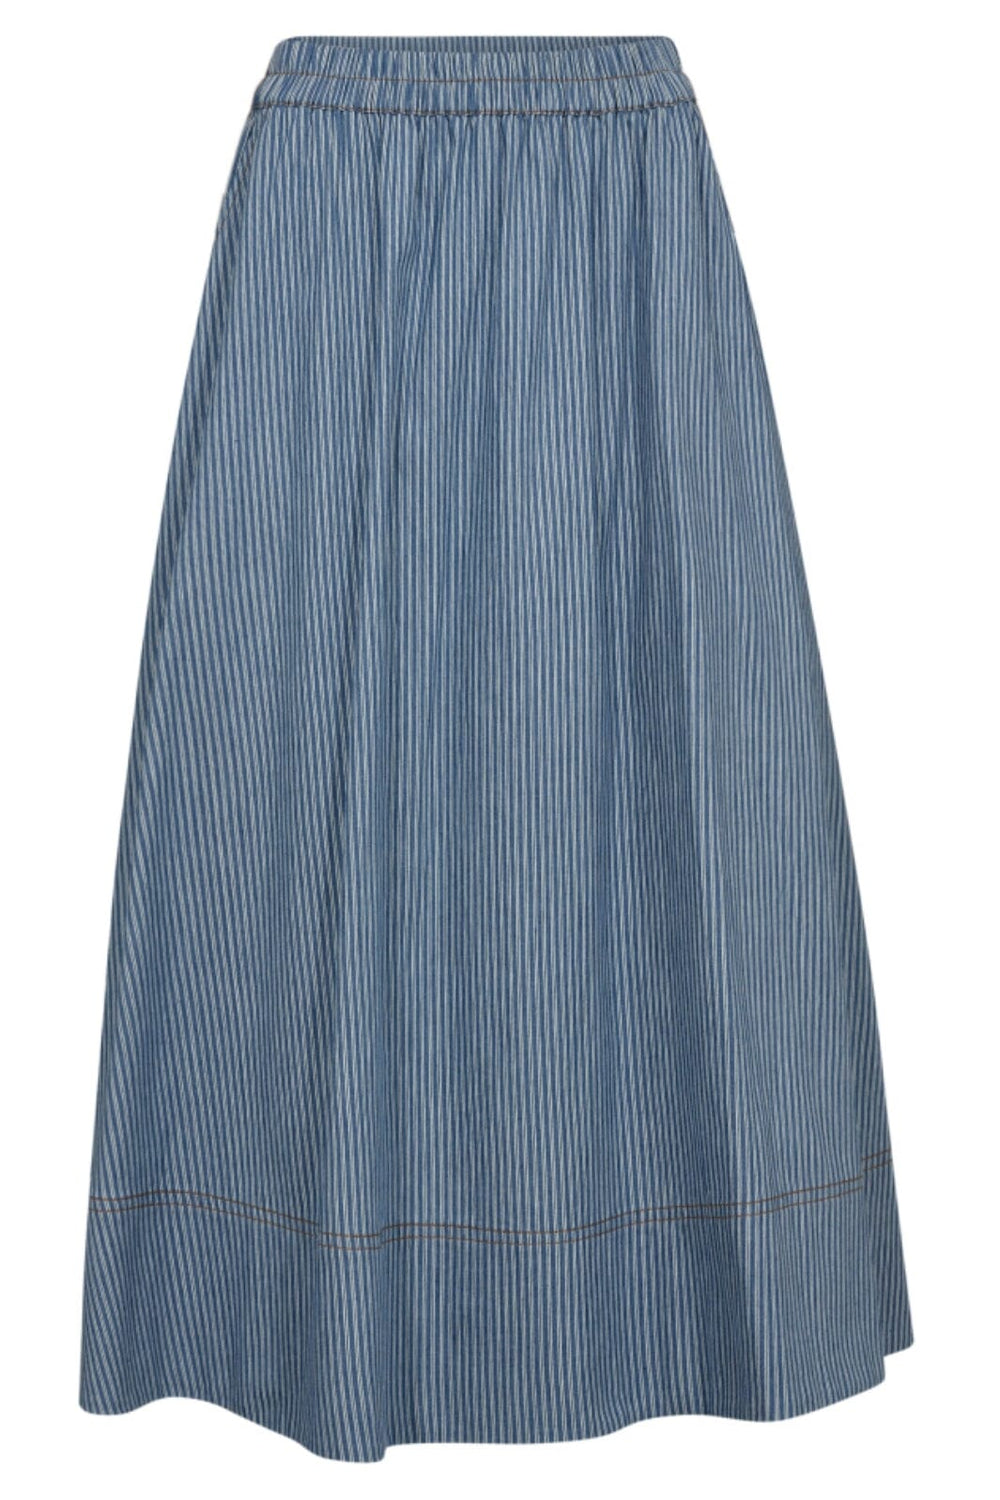 Forudbestilling - Co´couture - Tramcc Stripe Skirt 34126 - 552 Denim Blue Nederdele 